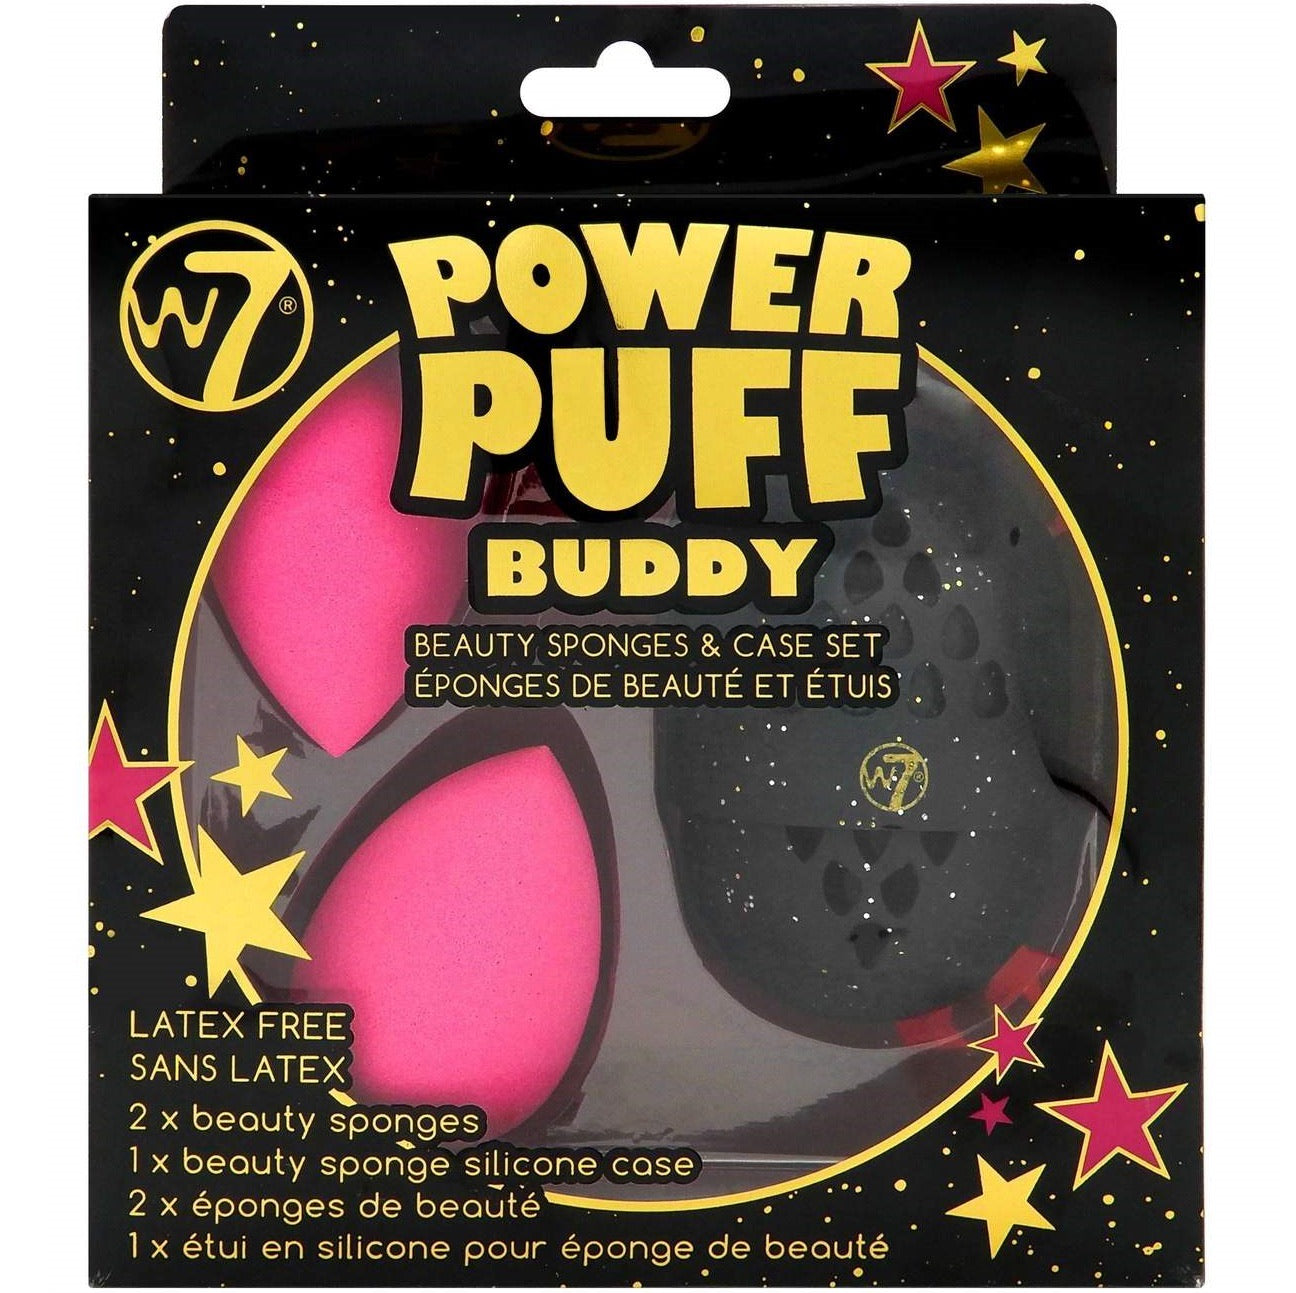 W7 Power Puff Buddy Beauty Sponges & Case Gift Set